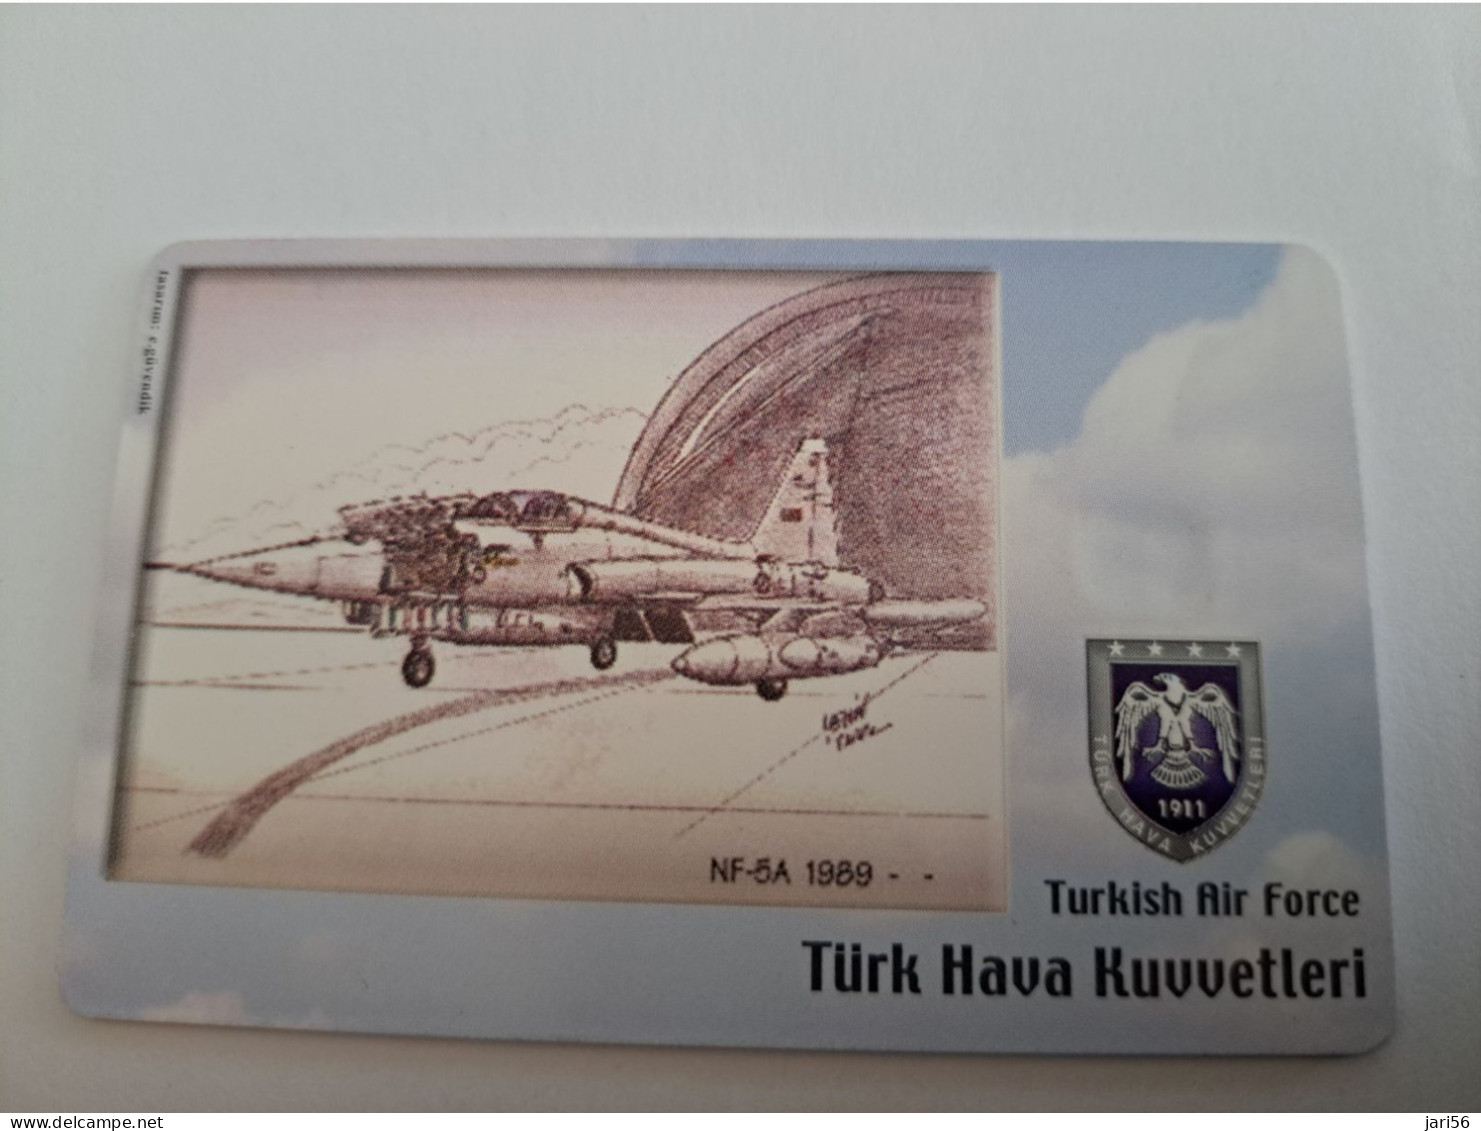 TURKIJE / 50 UNITS/ CHIPCARD/ TURKISH AIR FORCE  / DIFFERENT PLANES /        Fine Used Card  **15438** - Türkei